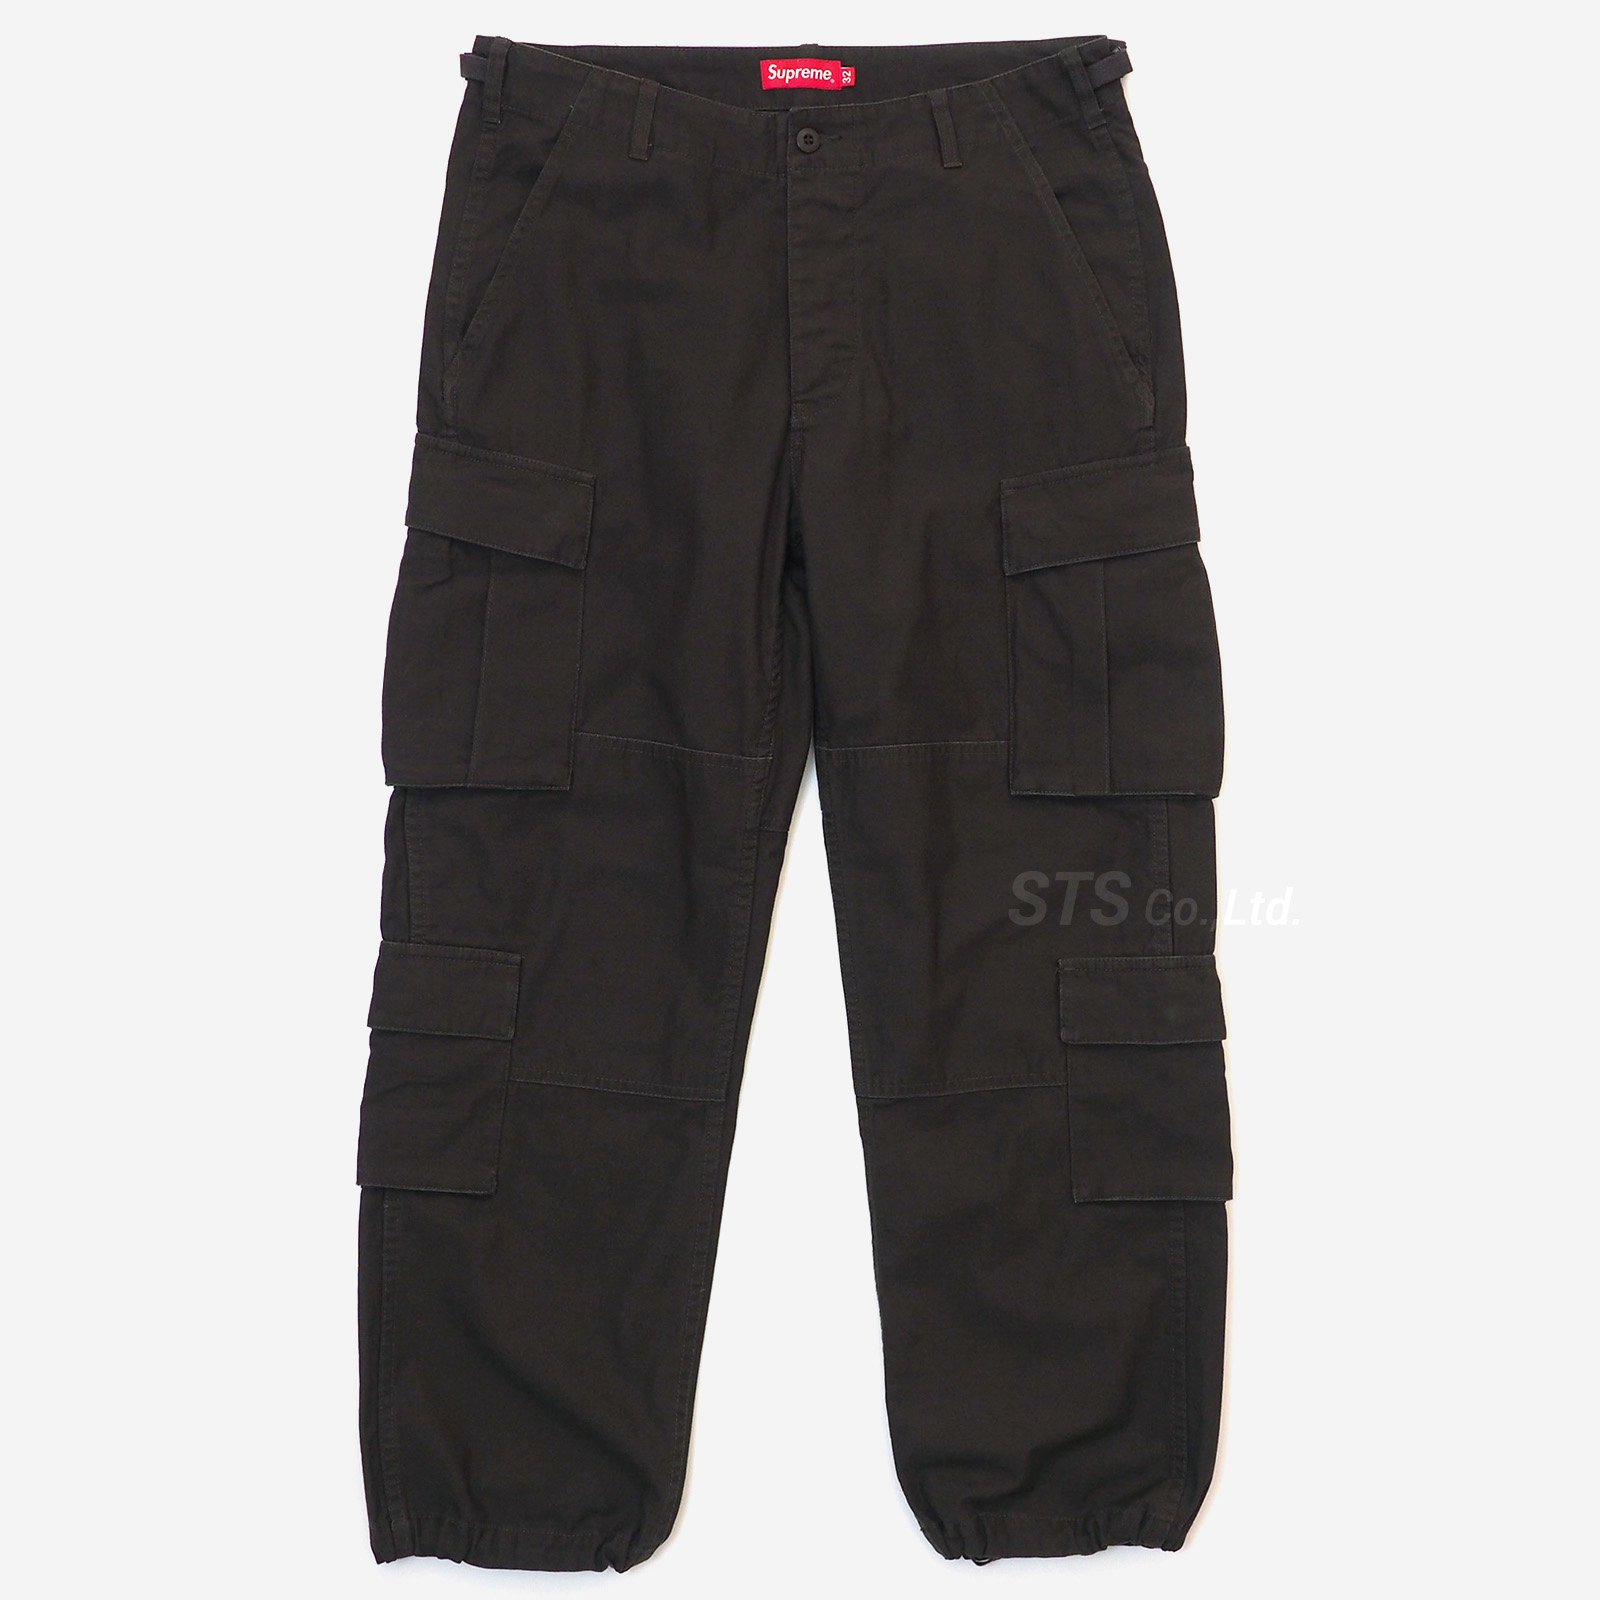 Supreme  cargo pants  22fw